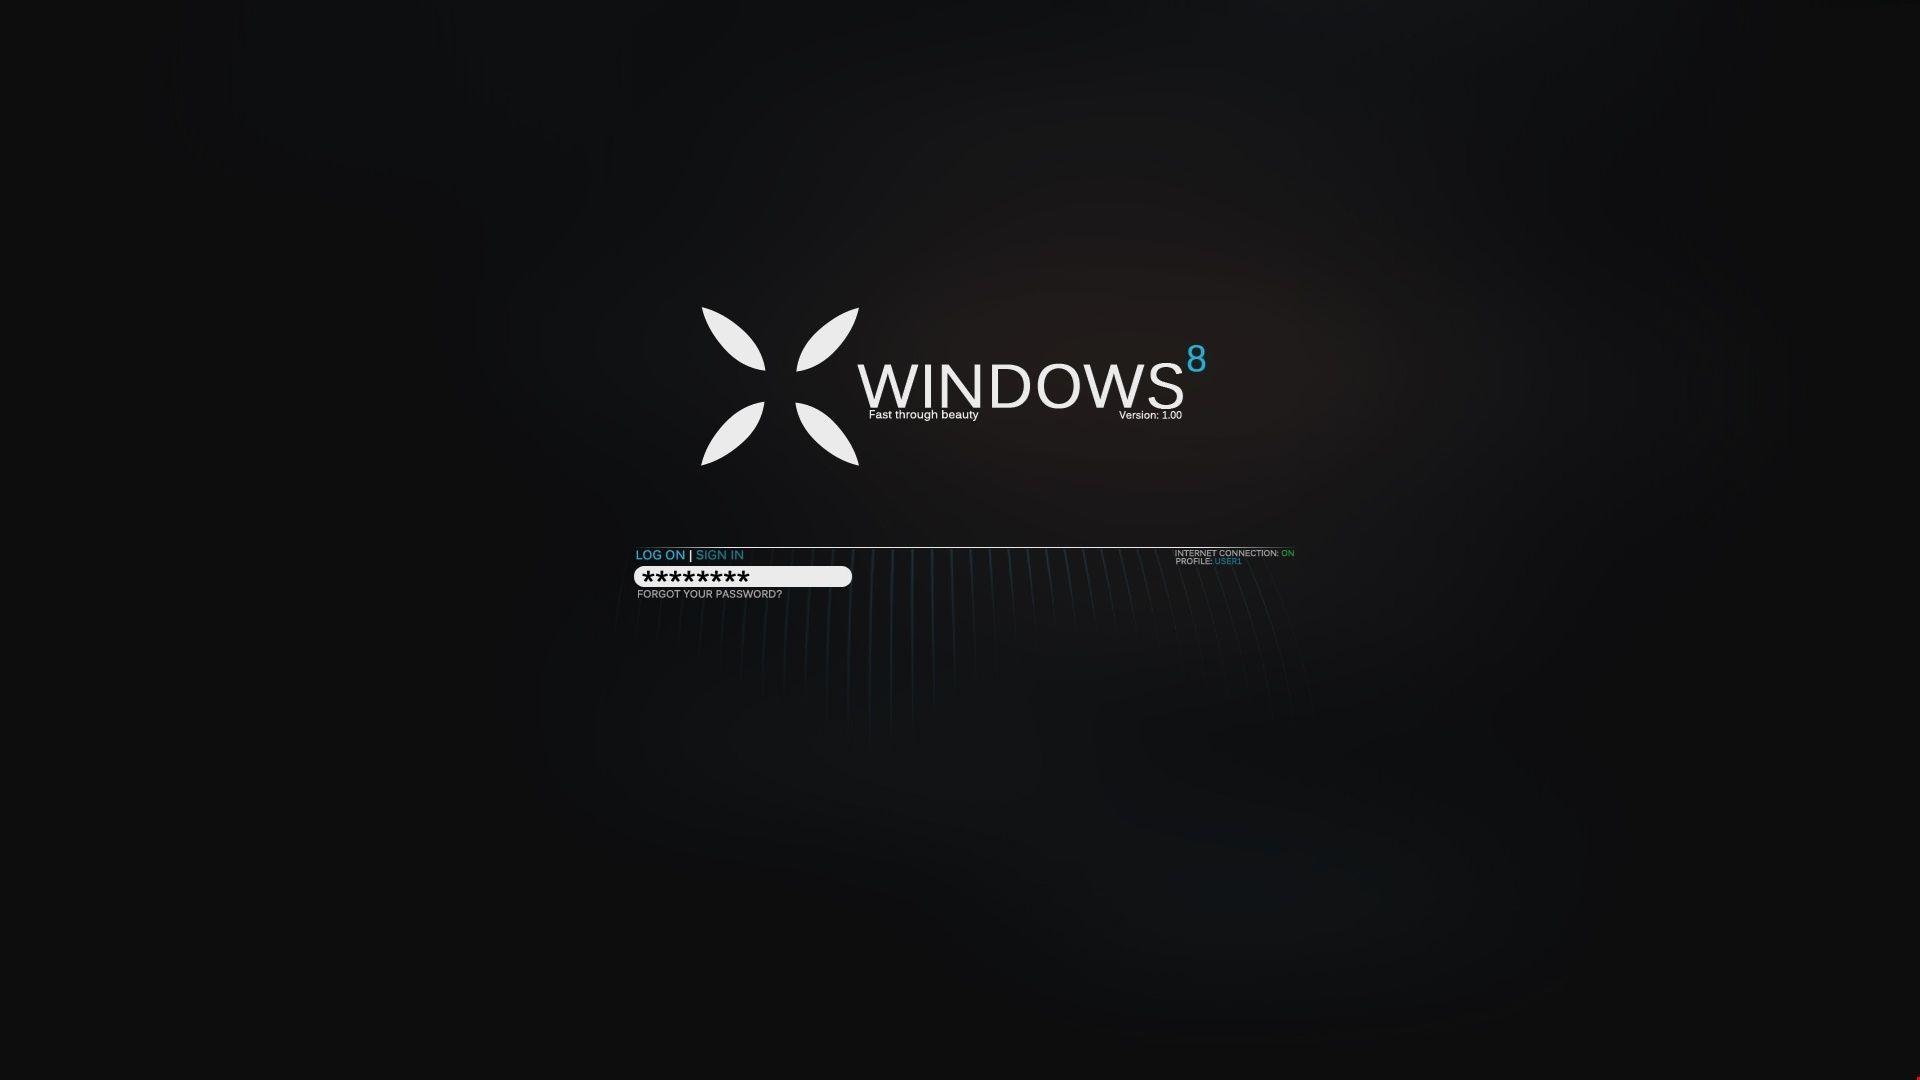 1k Prestige Windows 8 HD Background. HD